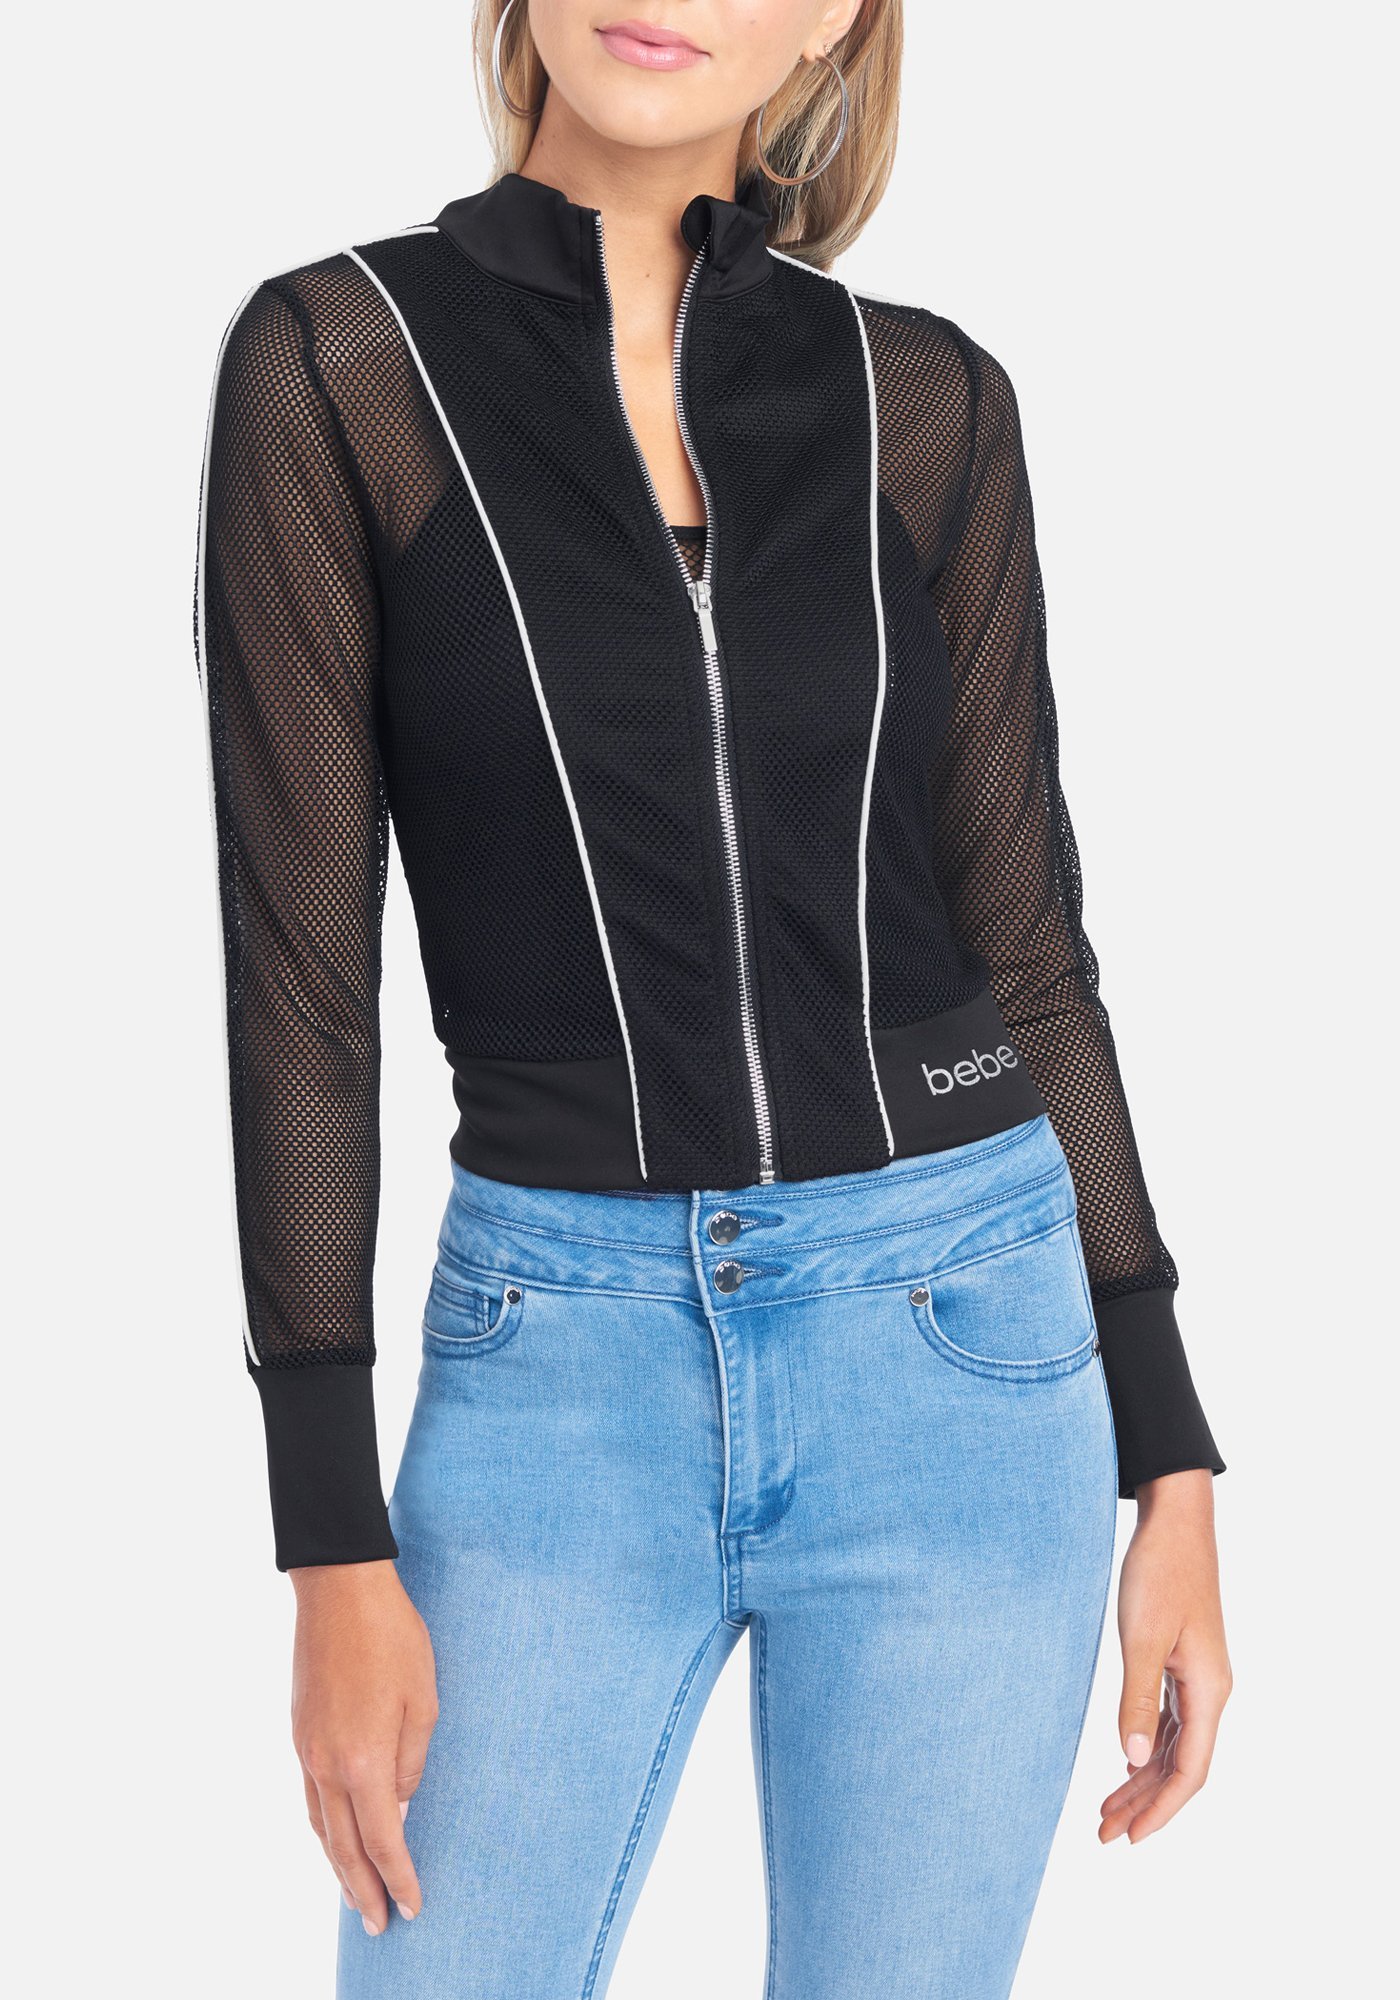 Women's Bebe logo mesh Jacket, Size XL in Black Polyester